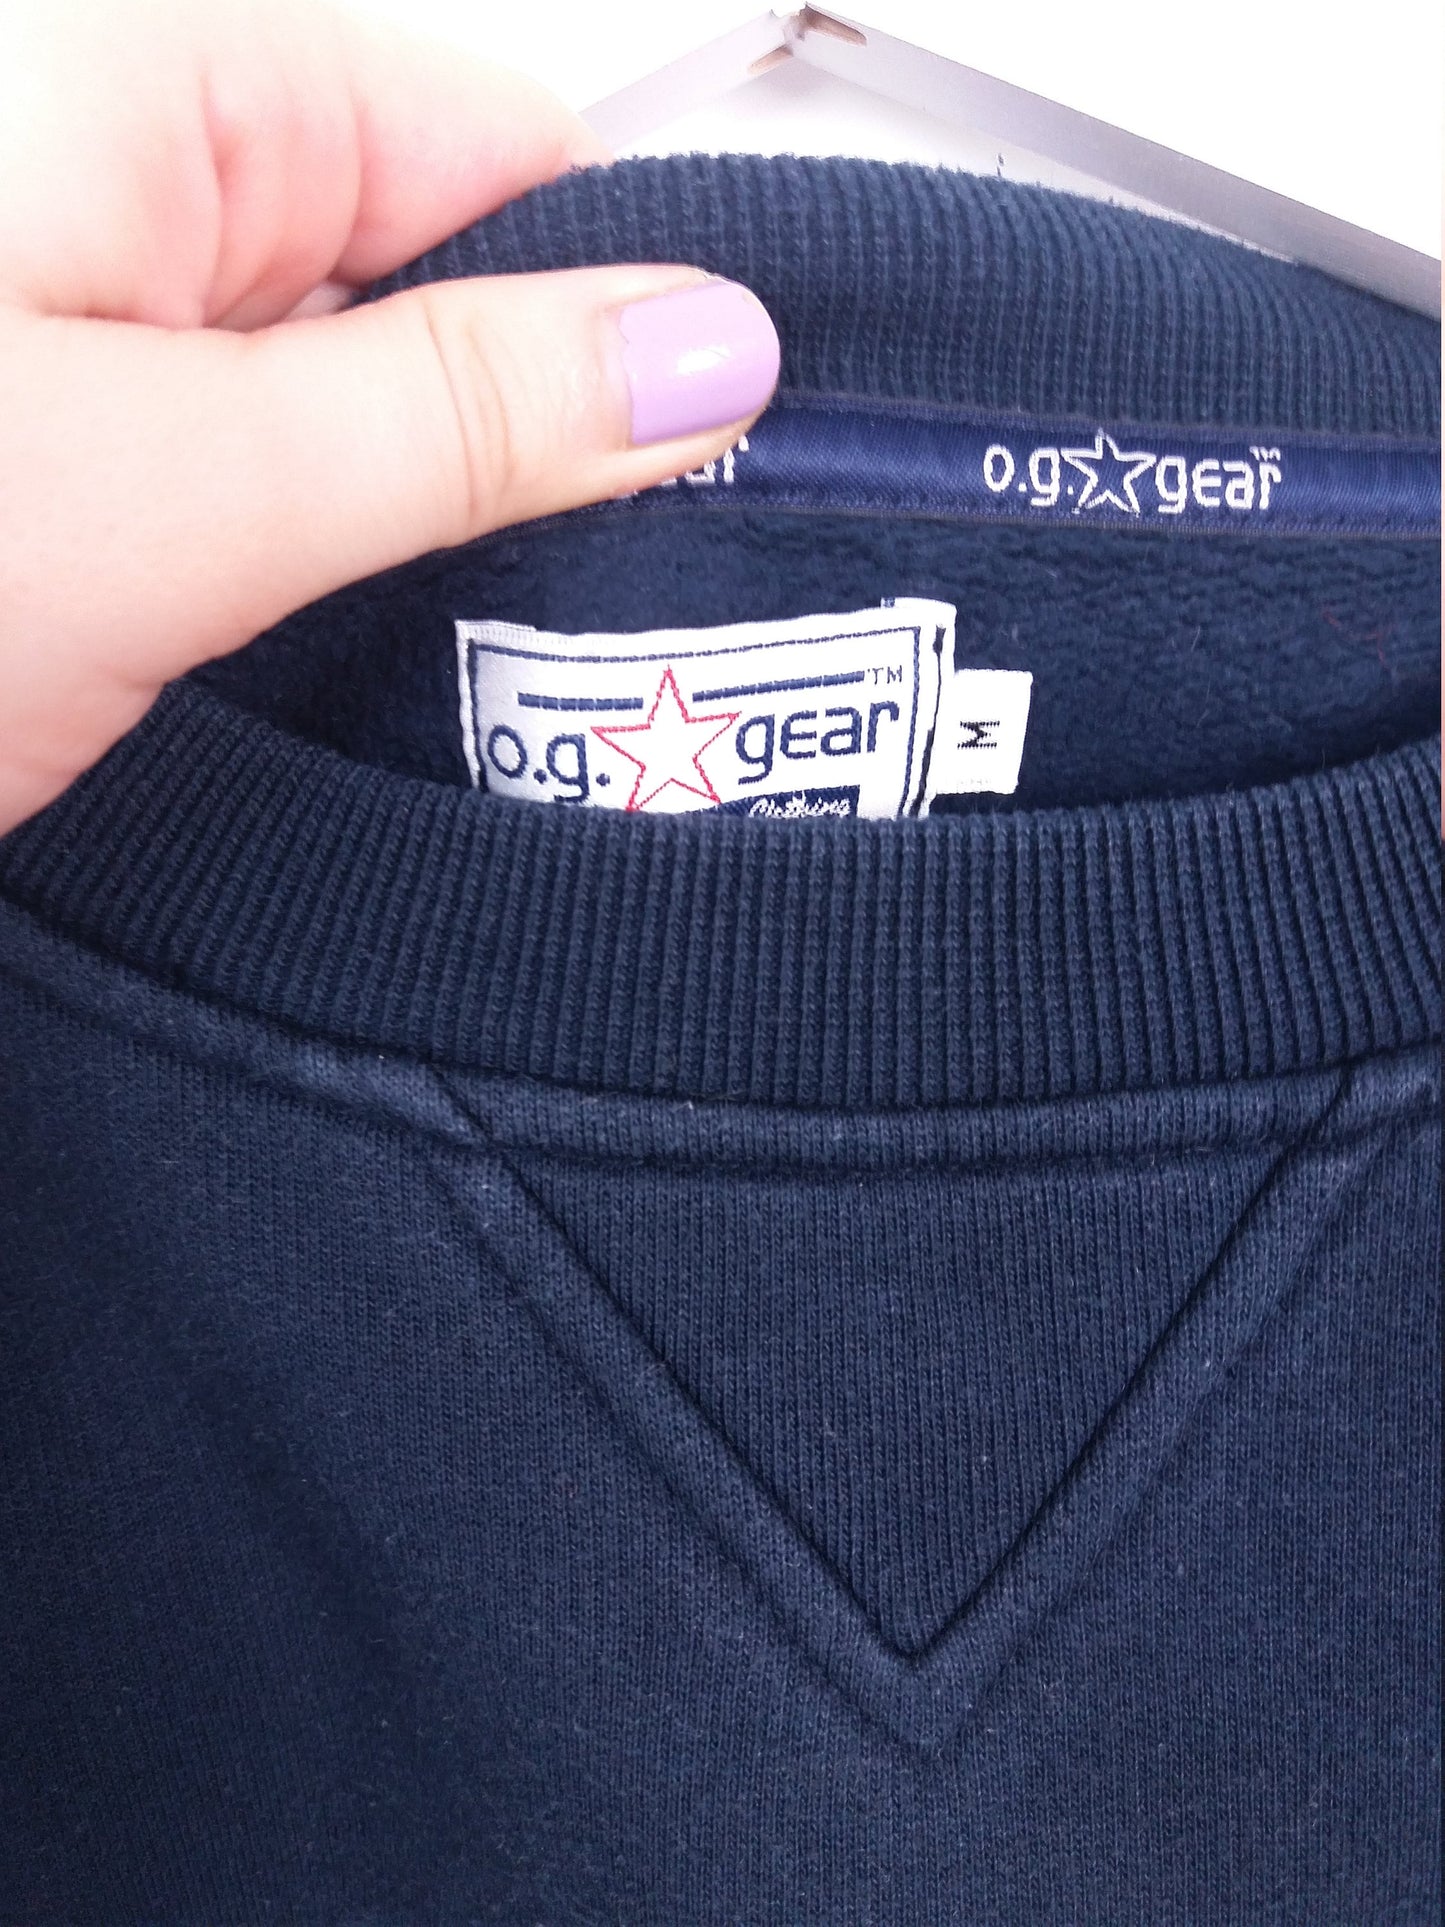 O.G. GEAR 90's Hip Hop Sweatshirt - size M